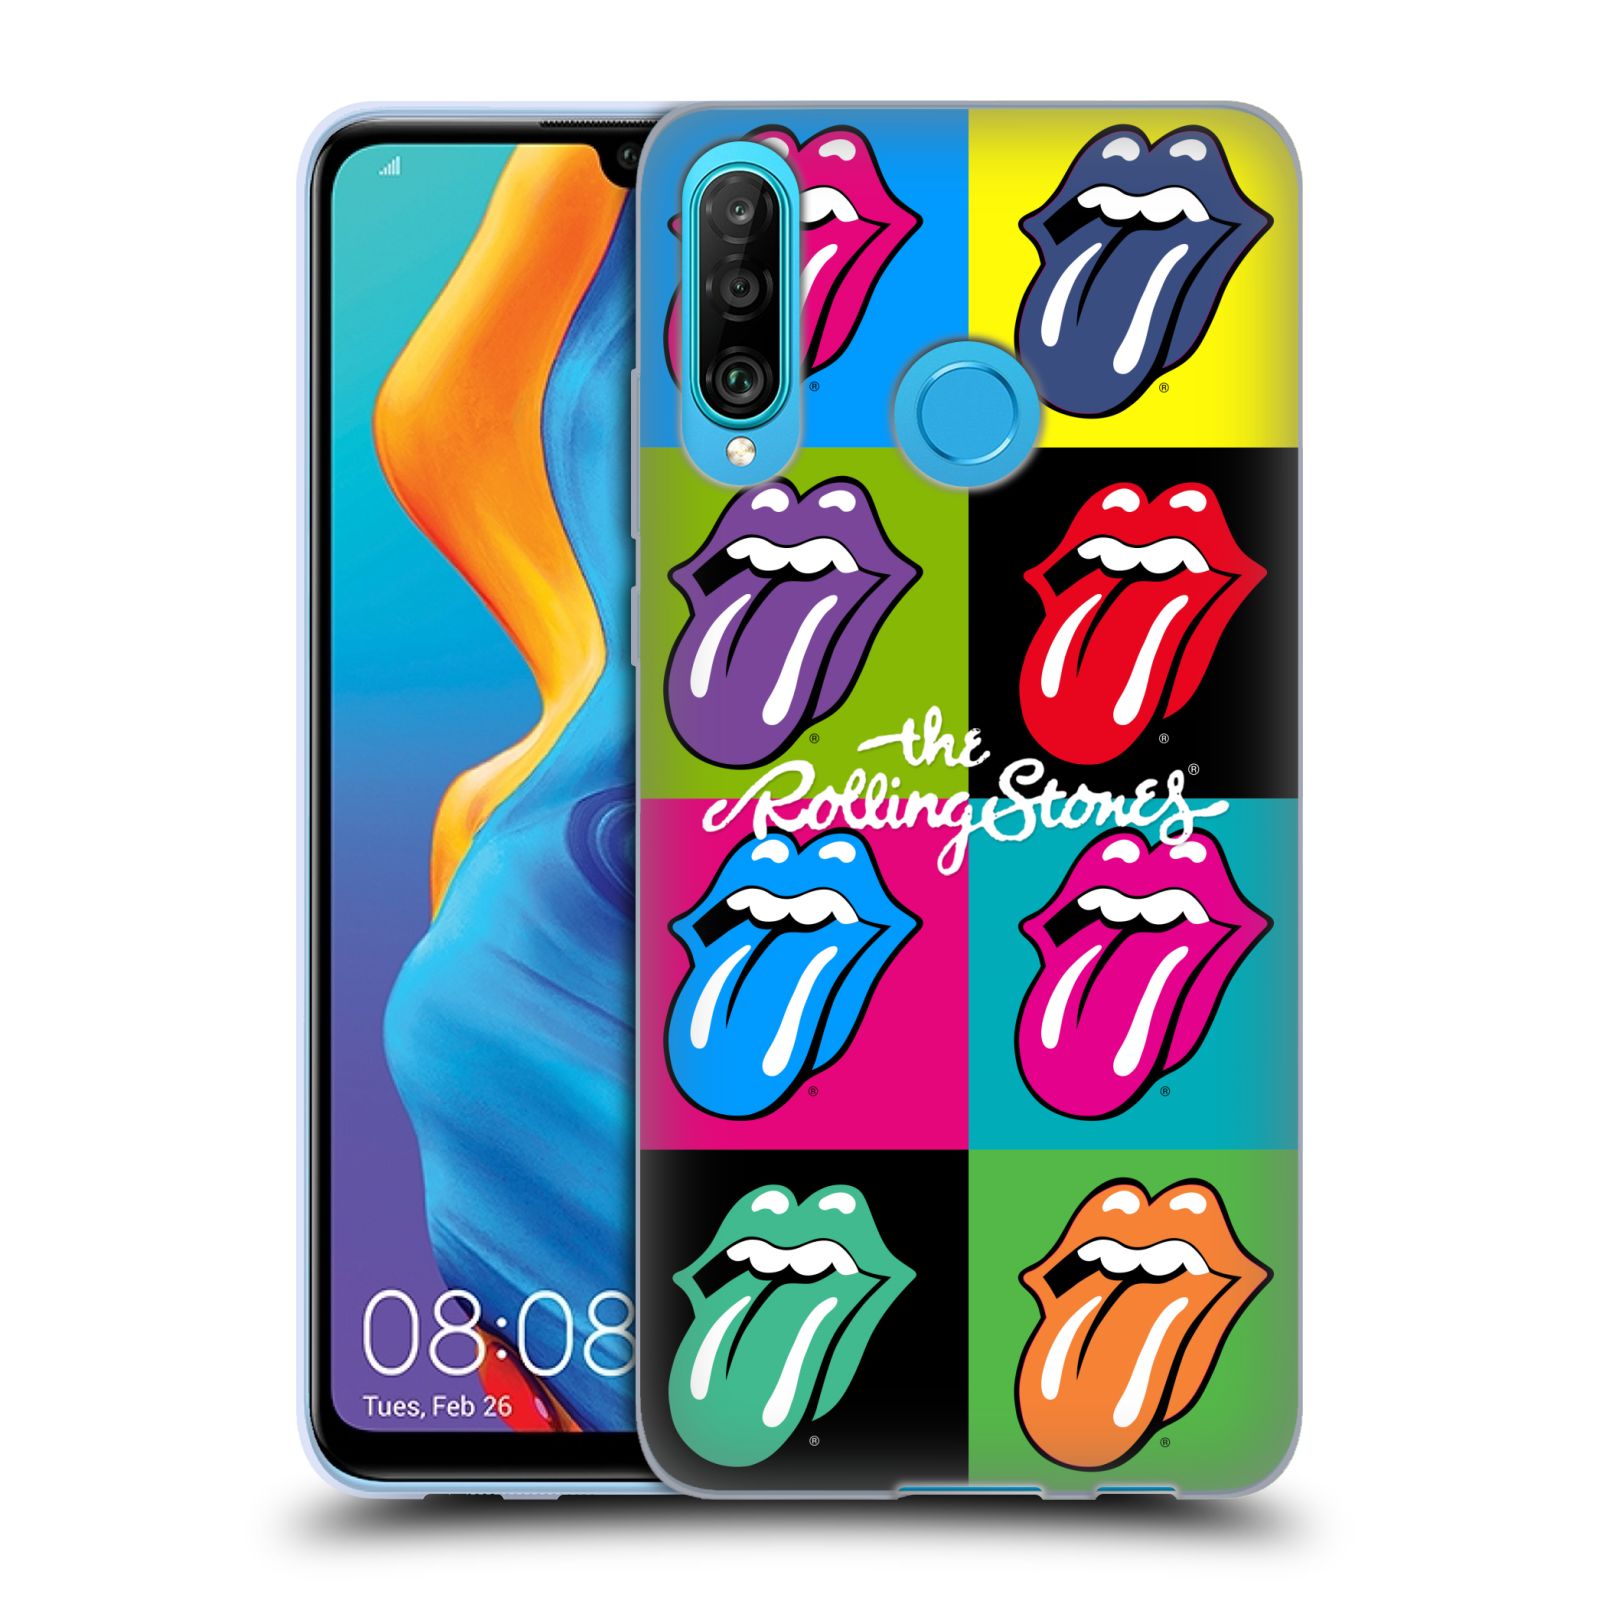 Silikonové pouzdro na mobil Huawei P30 Lite - Head Case - The Rolling Stones - Pop Art Vyplazené Jazyky (Silikonový kryt, obal, pouzdro na mobilní telefon Huawei P30 Lite Dual Sim (MAR-L01A, MAR-L21A, MAR-LX1A) s motivem The Rolling Stones - Pop Art)